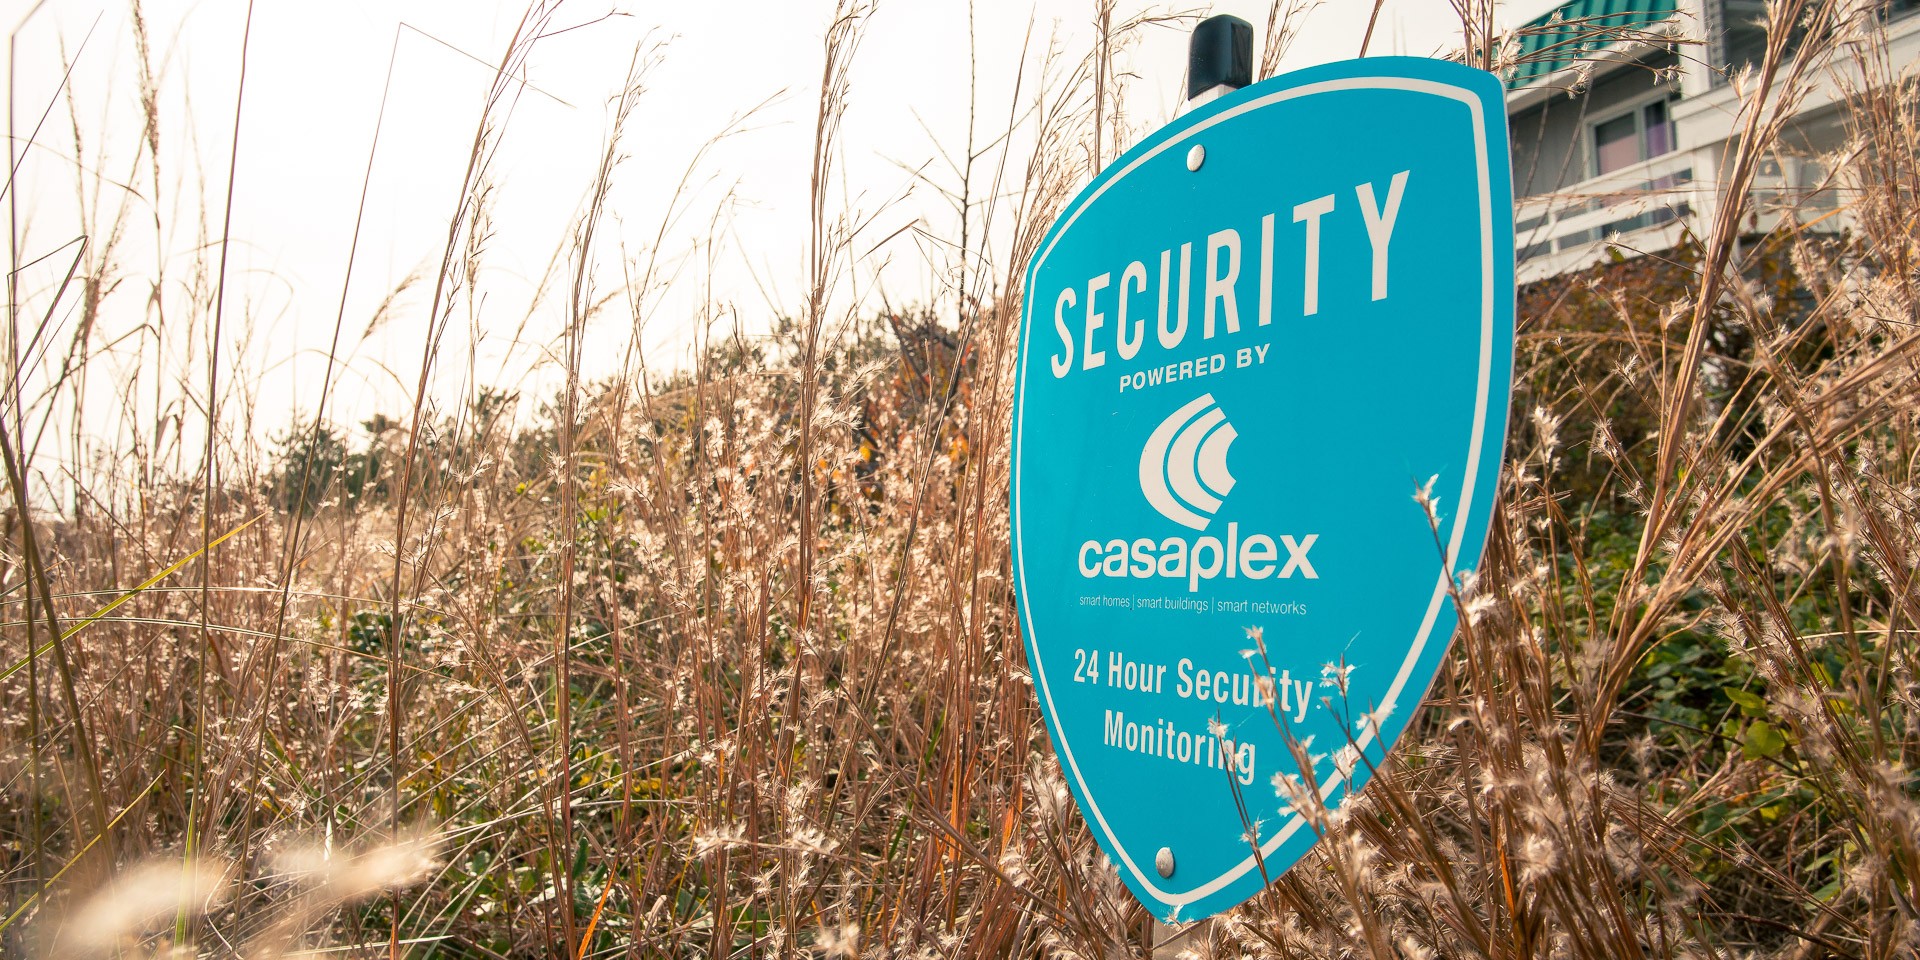 Security by Casaplex